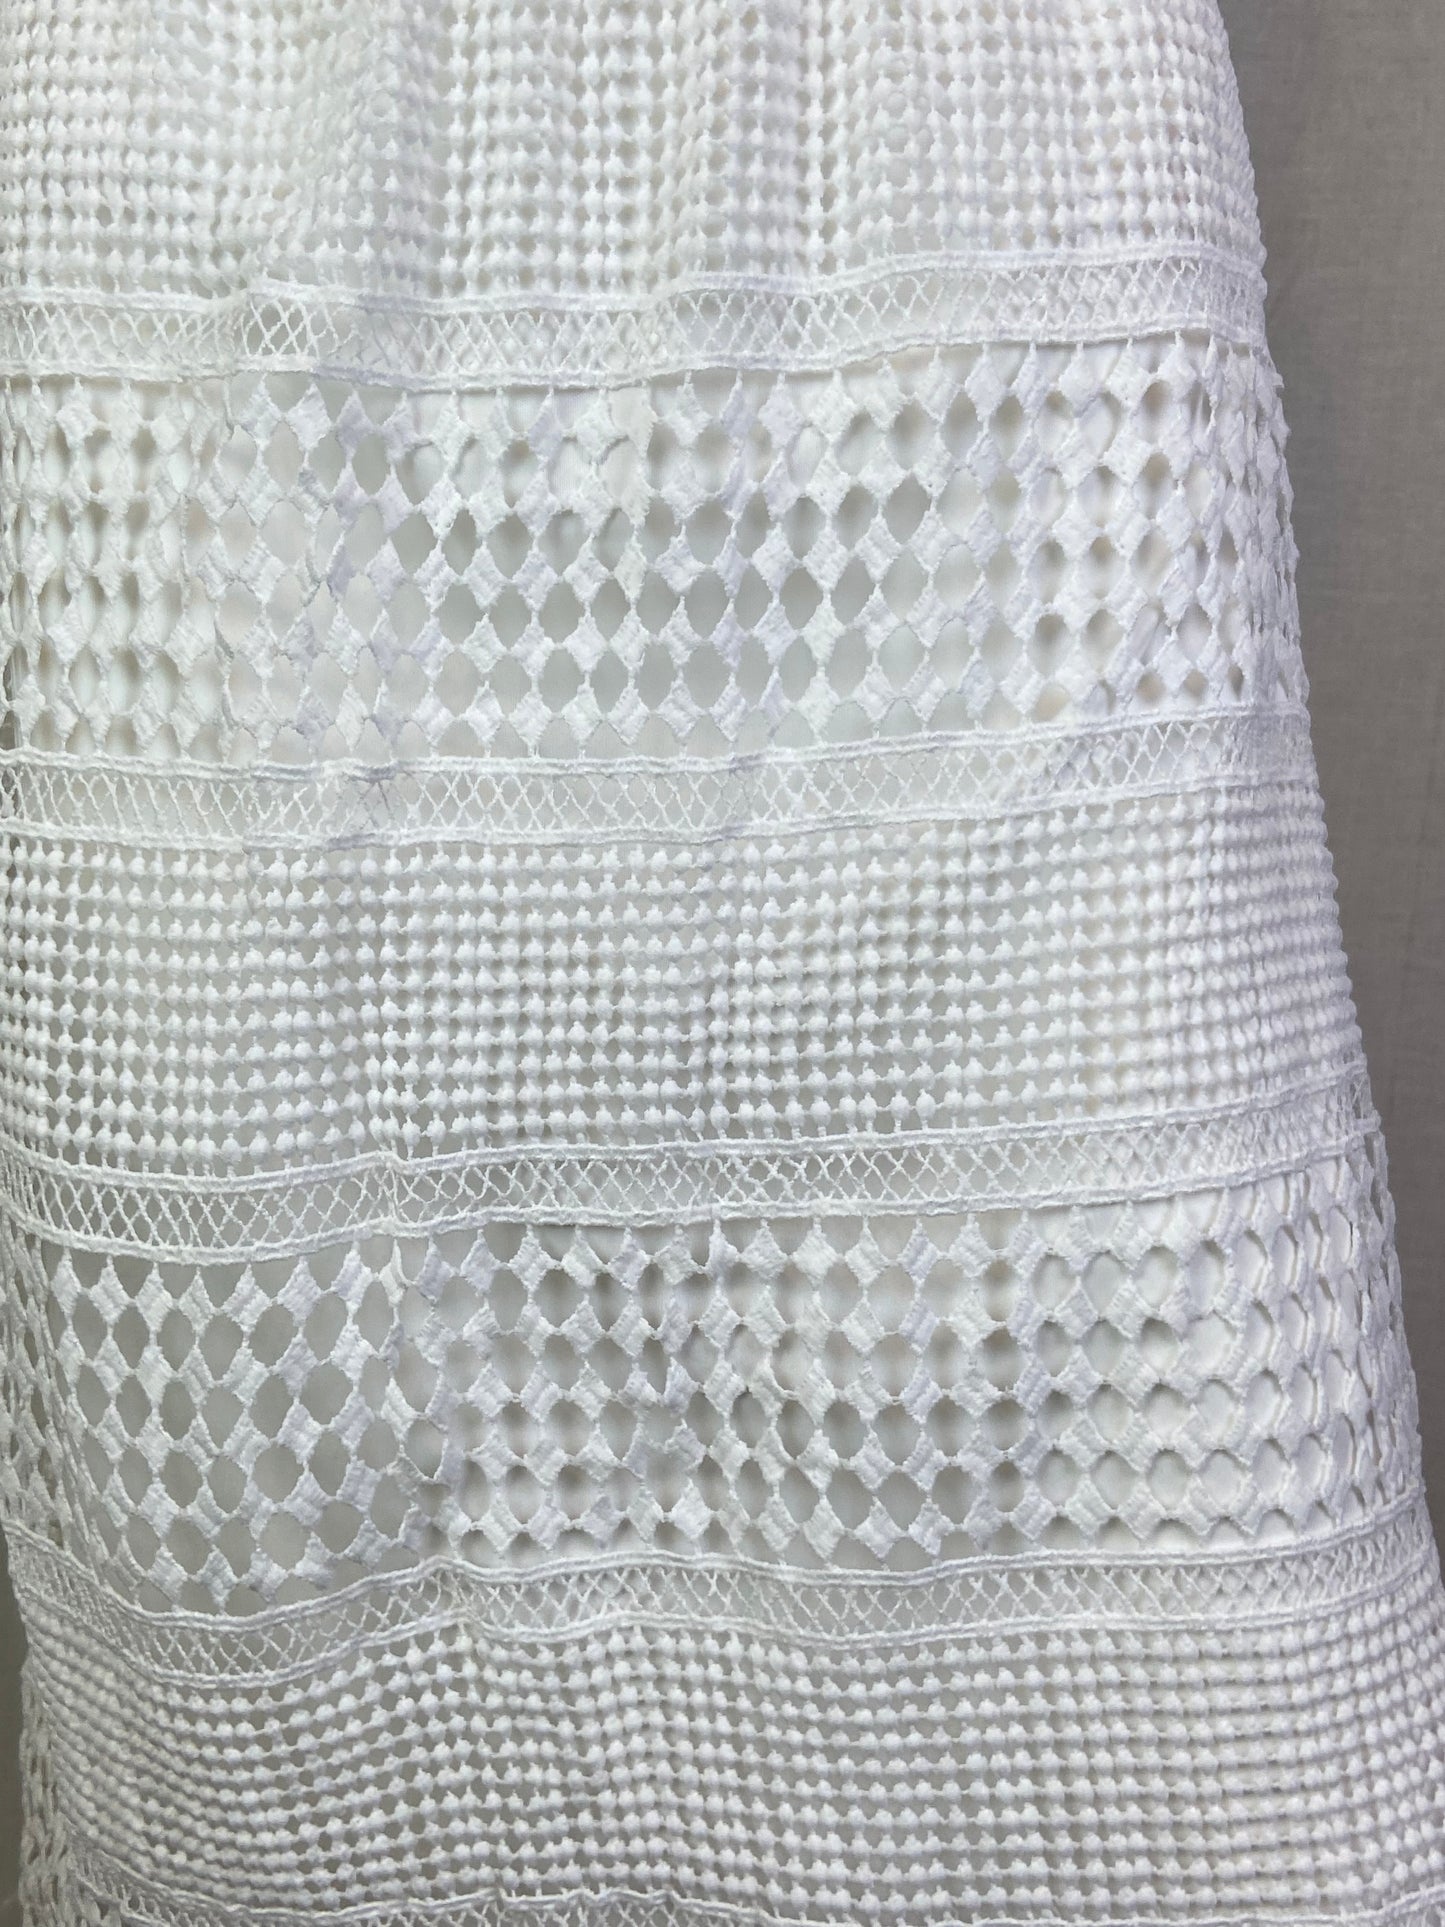 Studio West White Crochet Lace Skirt NWT